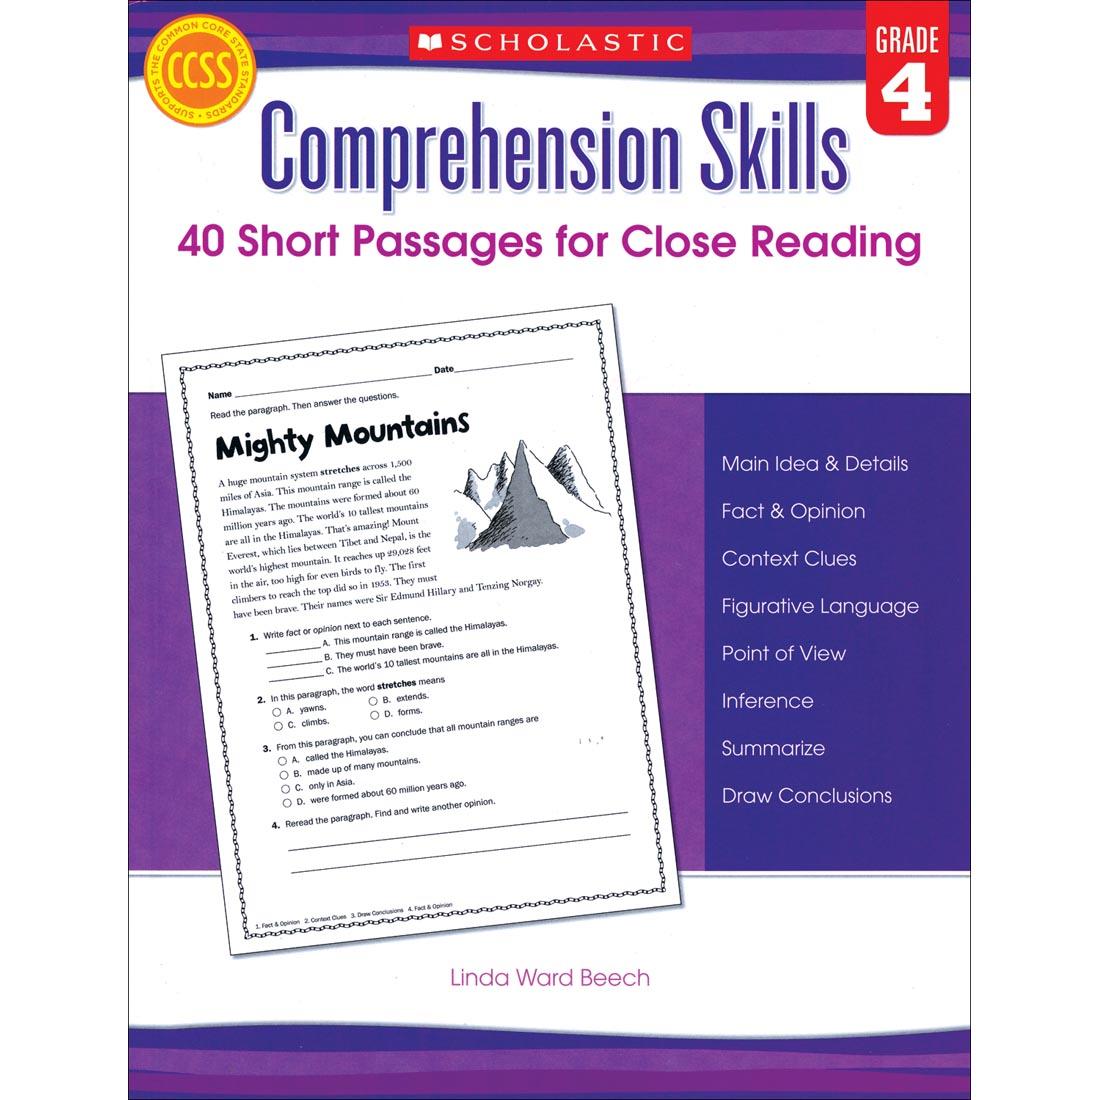 Comprehension Skills: 40 Short Passages for Close Reading Grade 4